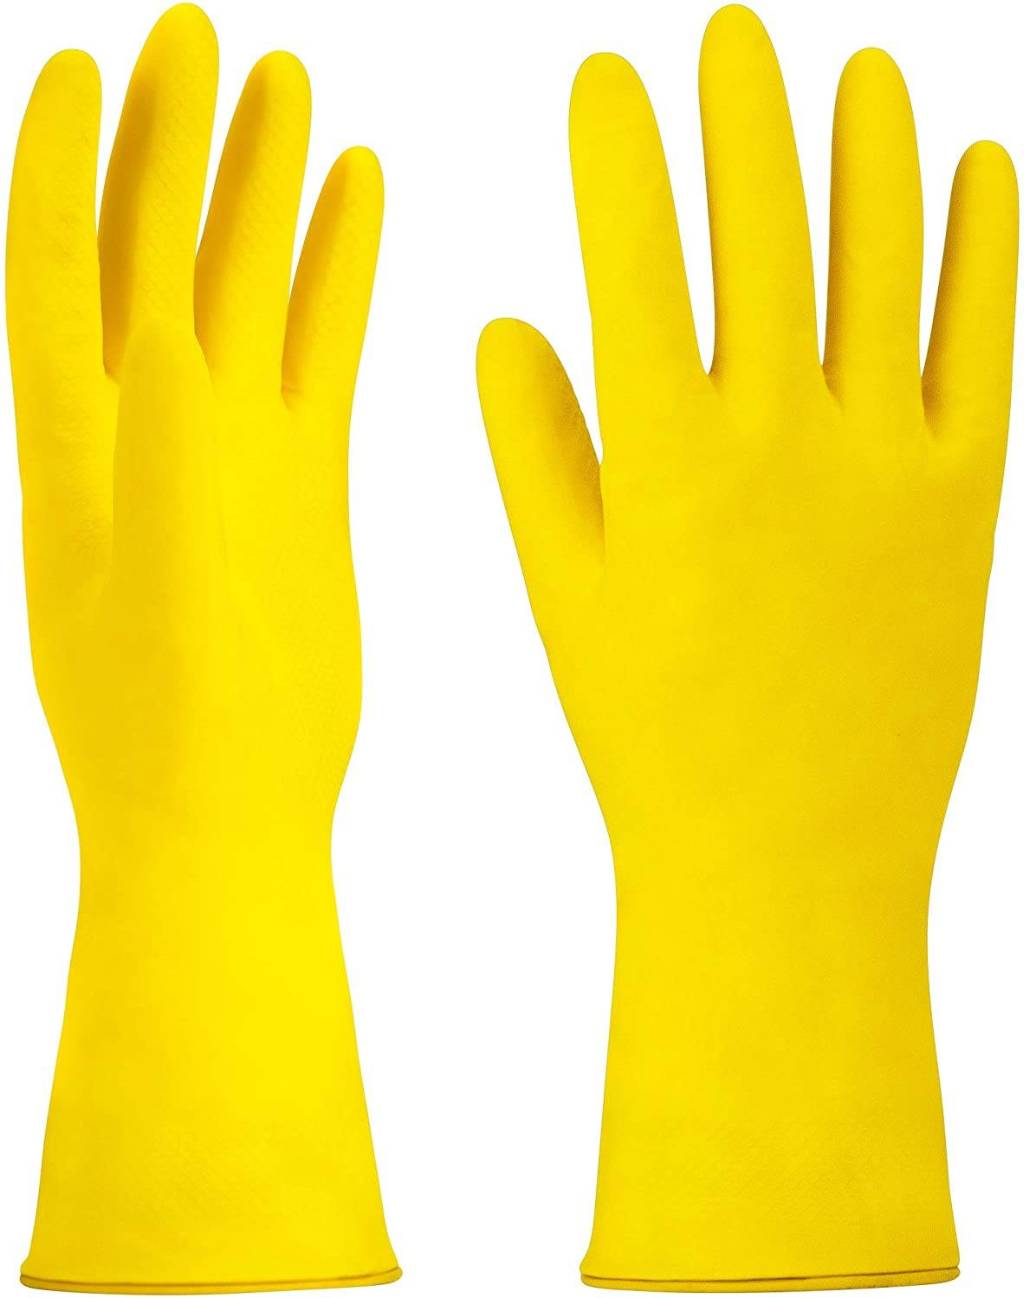 Rubber Save Gloves from Virus বাংলাদেশ - 1146974